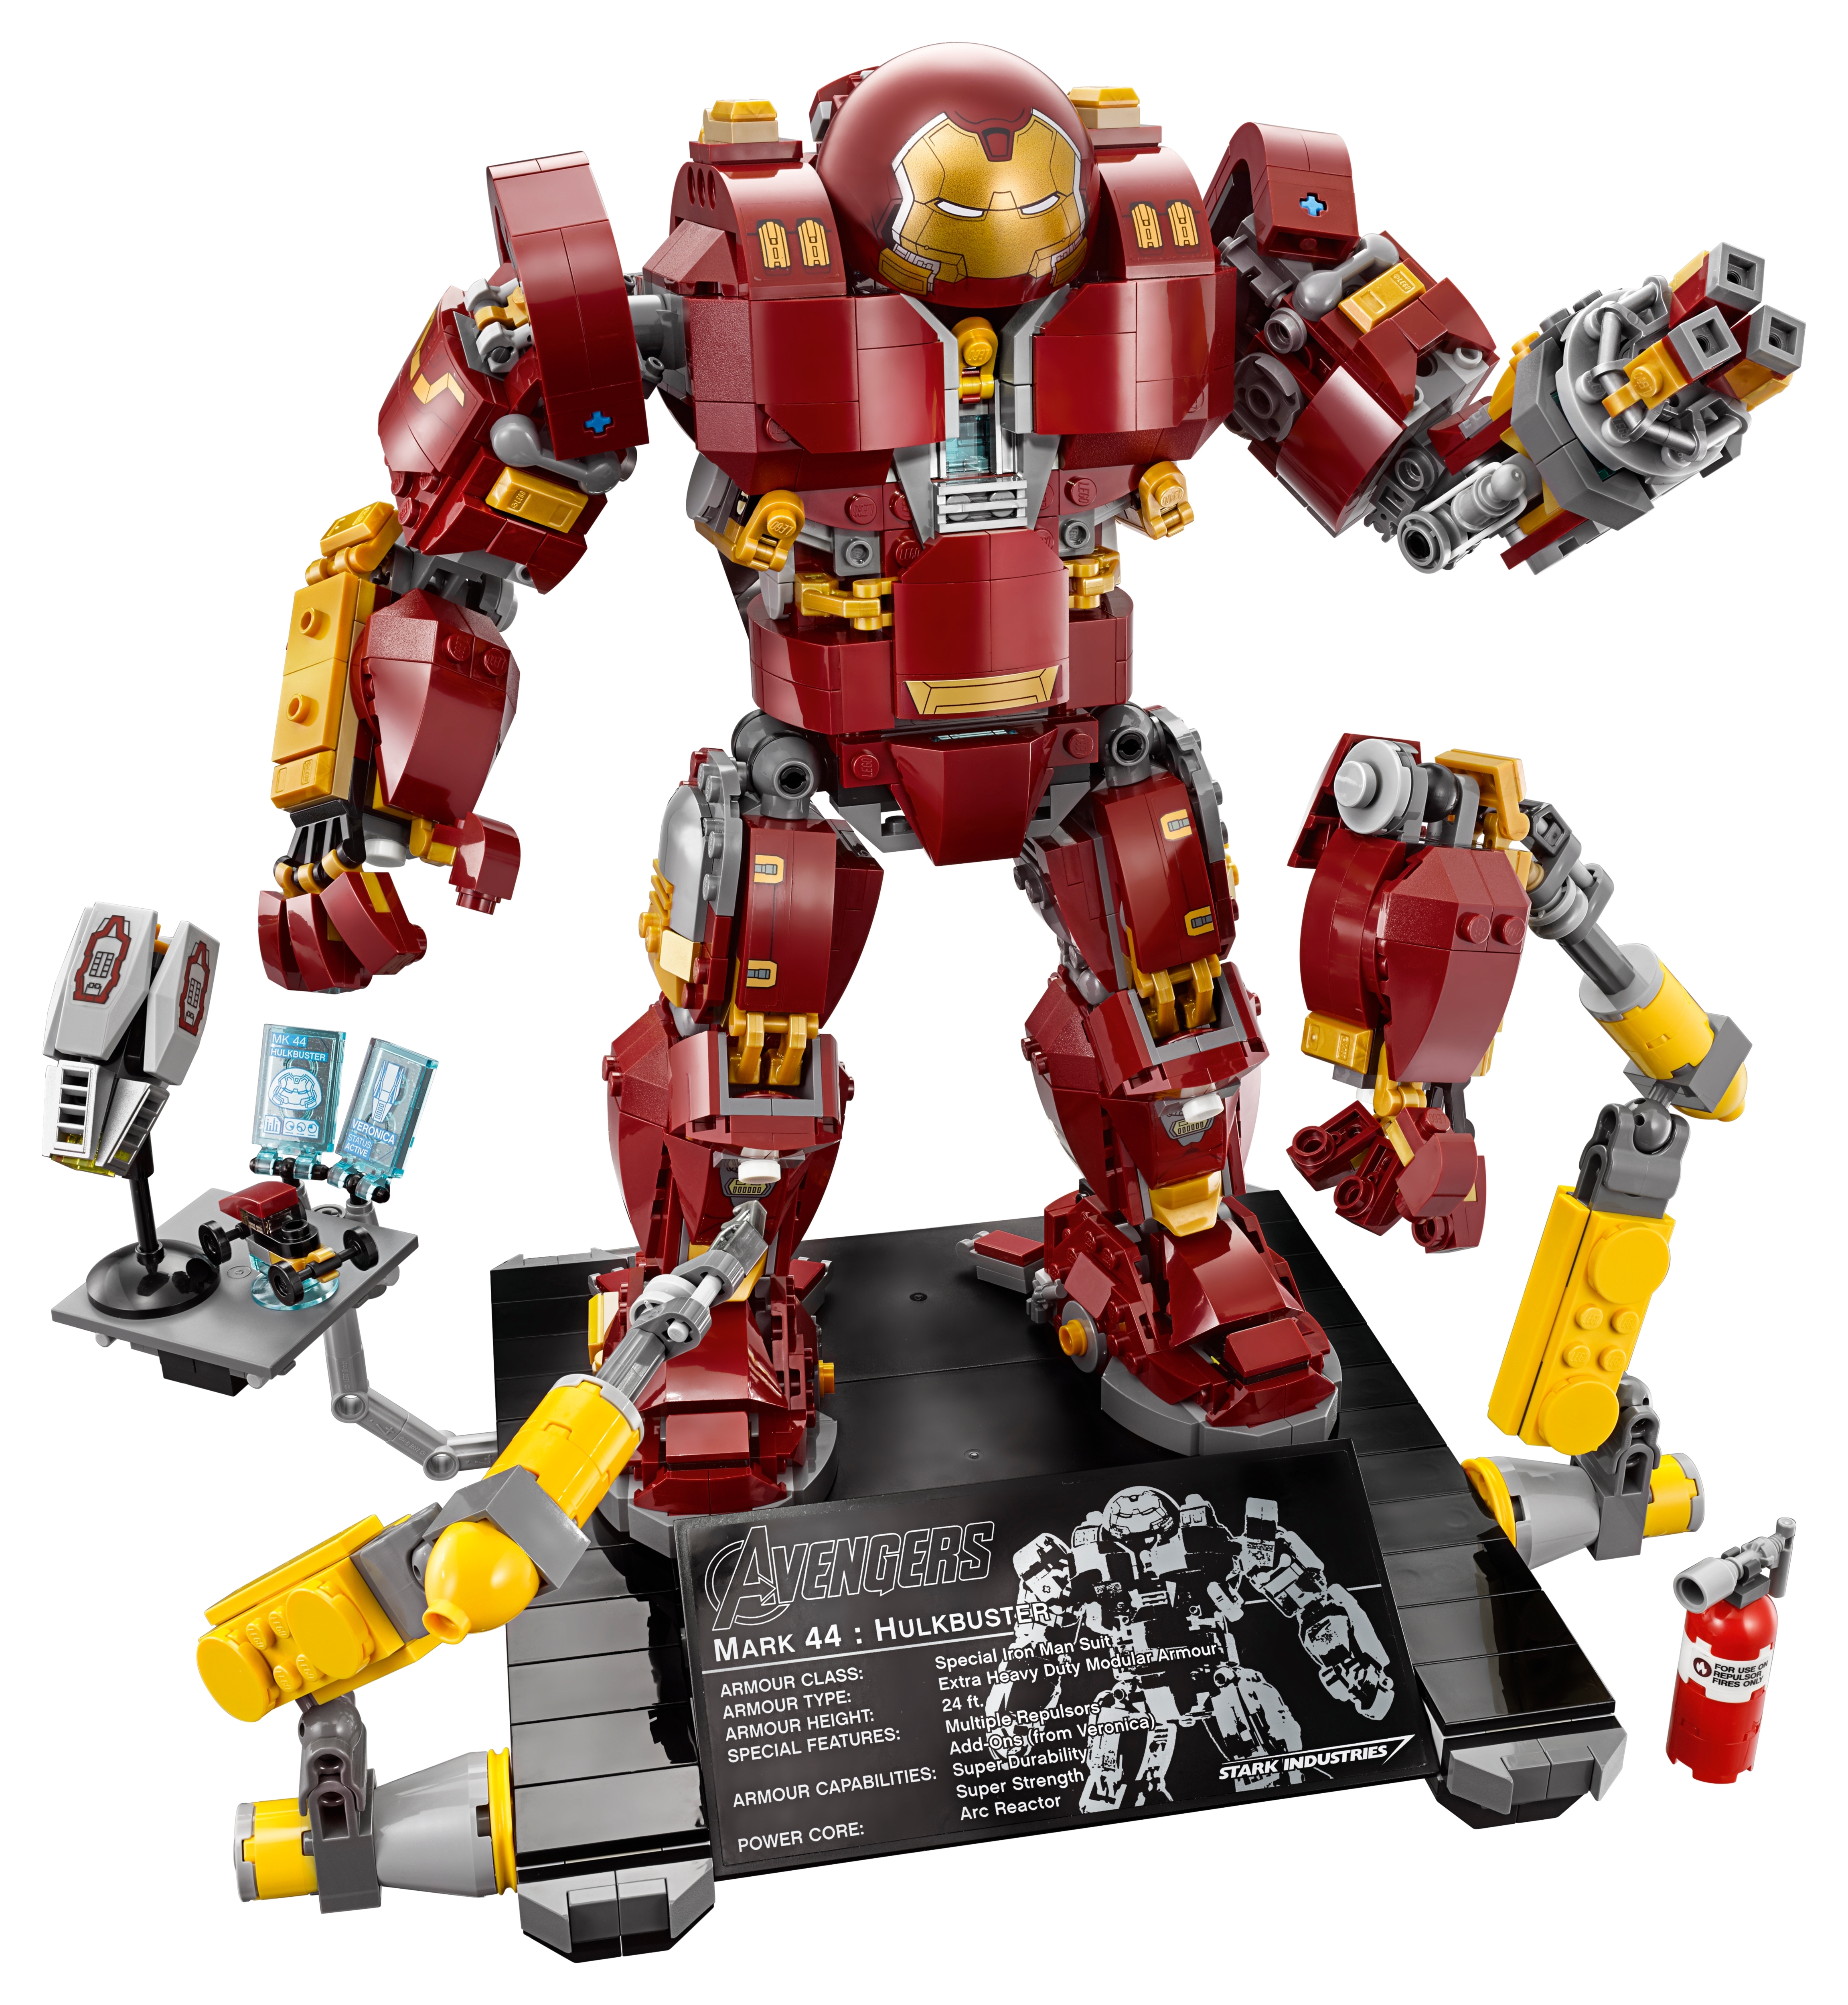 Marvel Iron Man 76105 The Hulkbuster Ultron Edition Avengers Mark Toy New Gift 